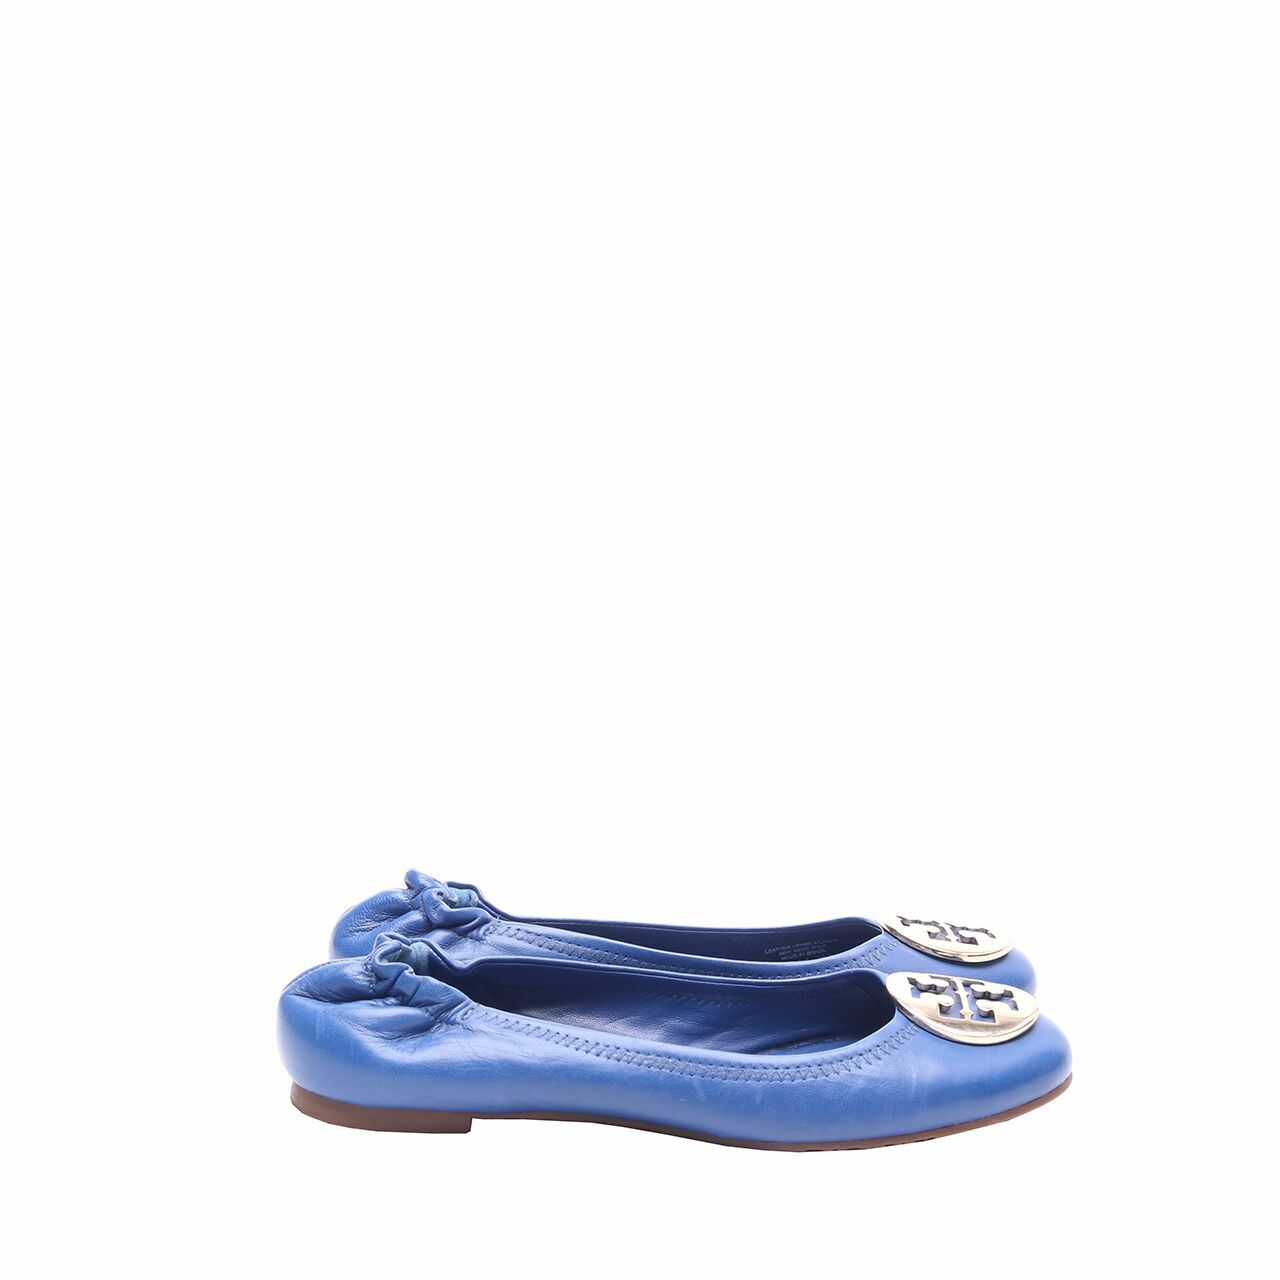 Tory Burch Reva Blue Flats Shoes